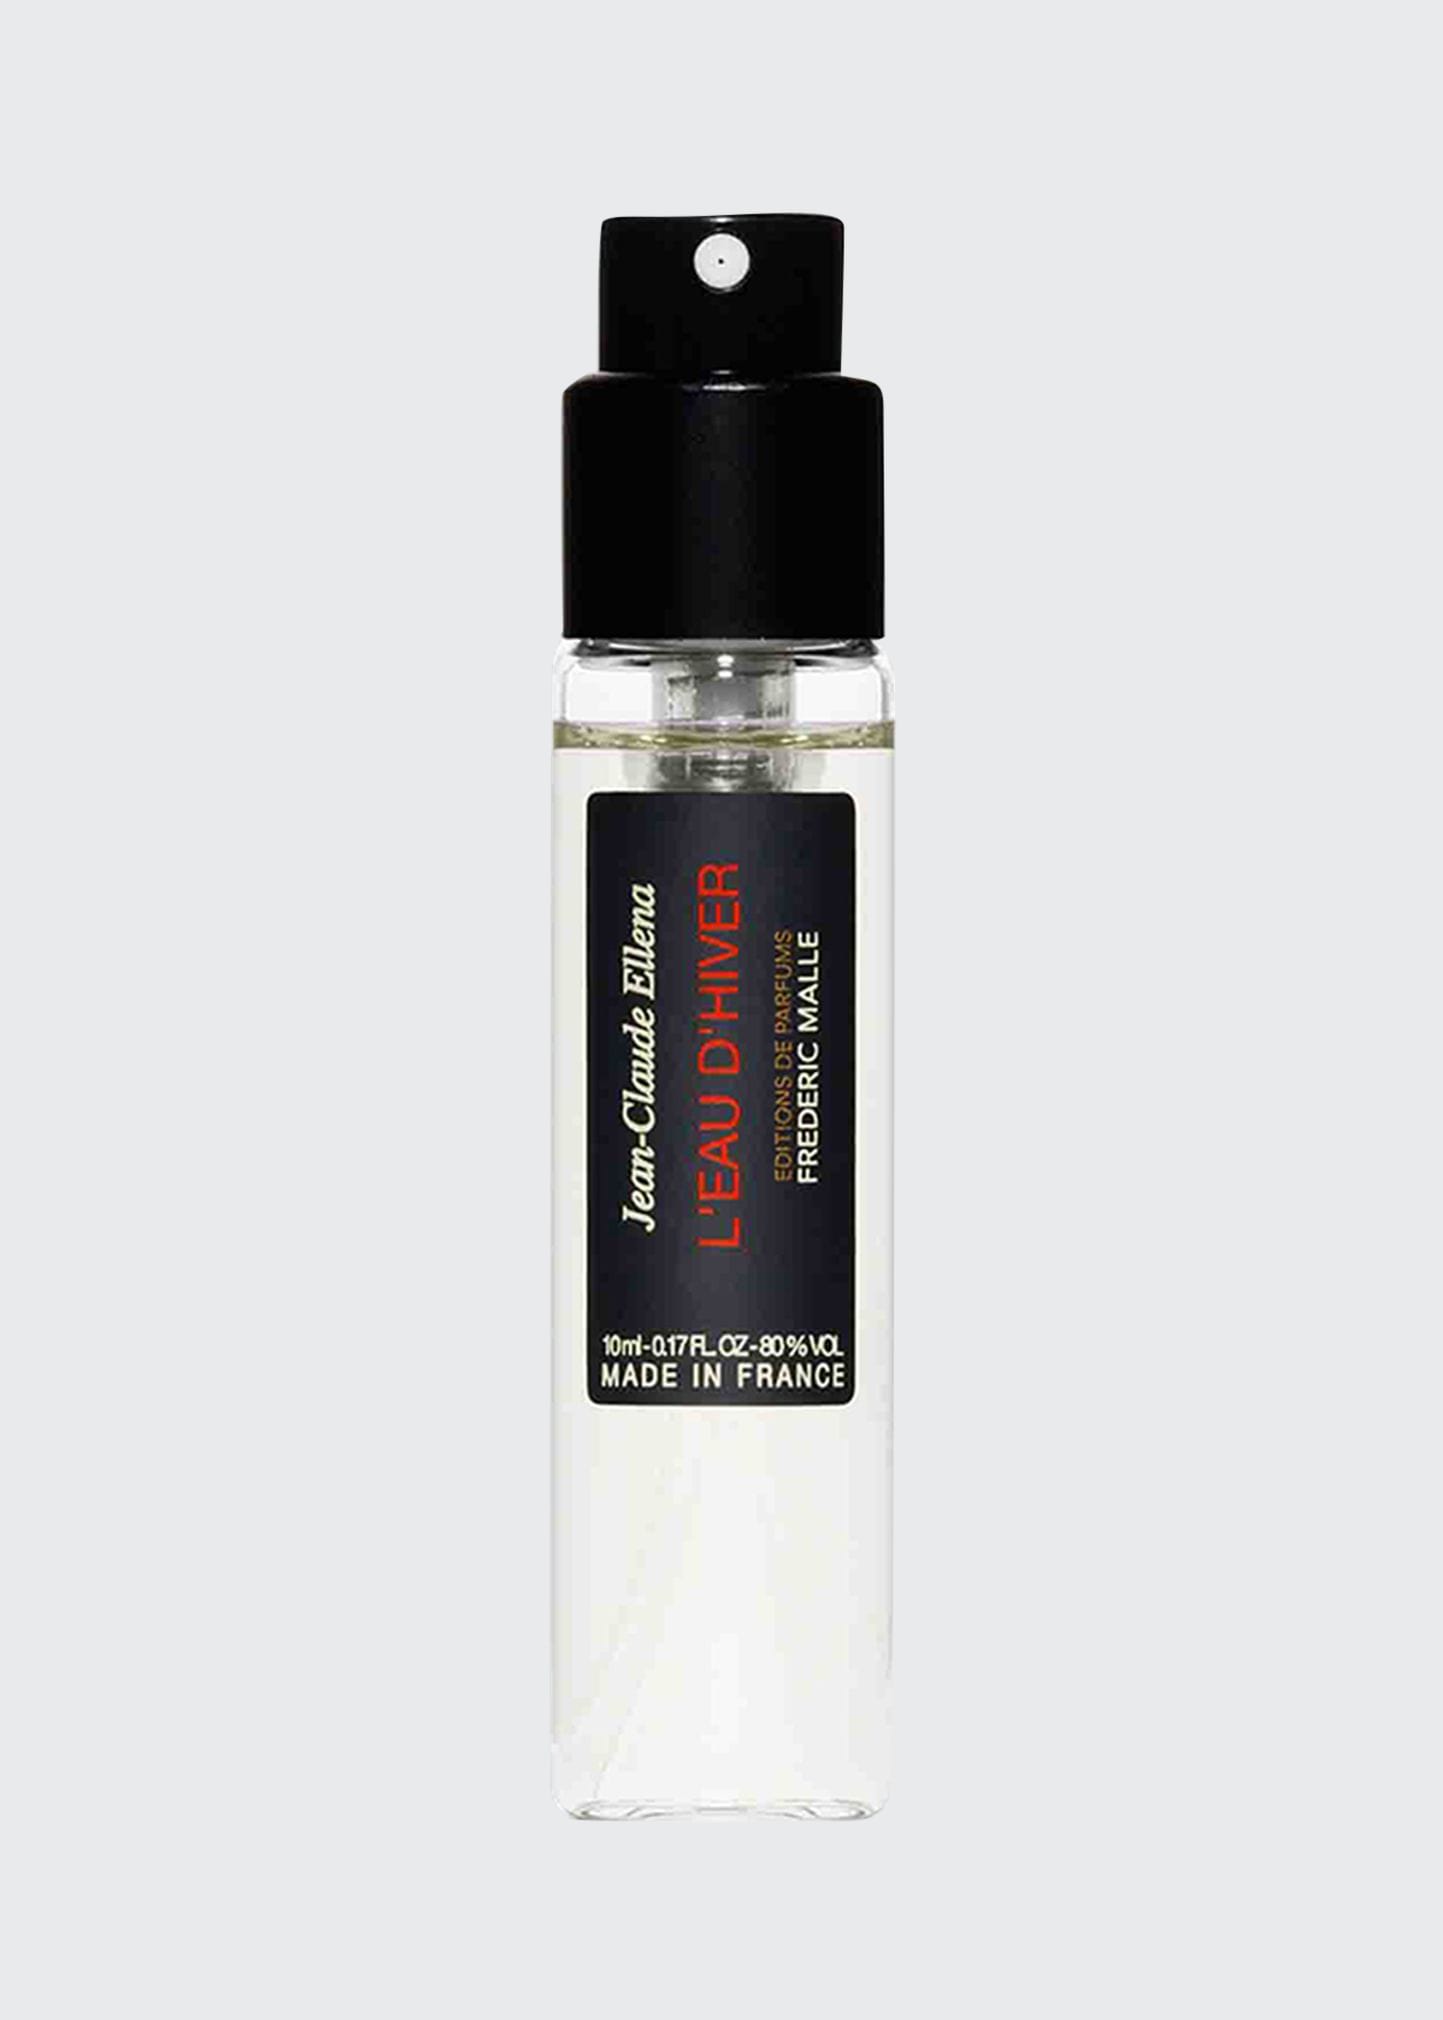 Frederic Malle l'eau d'hiver Travel Perfume Refill, 0.3 oz./ 10 mL